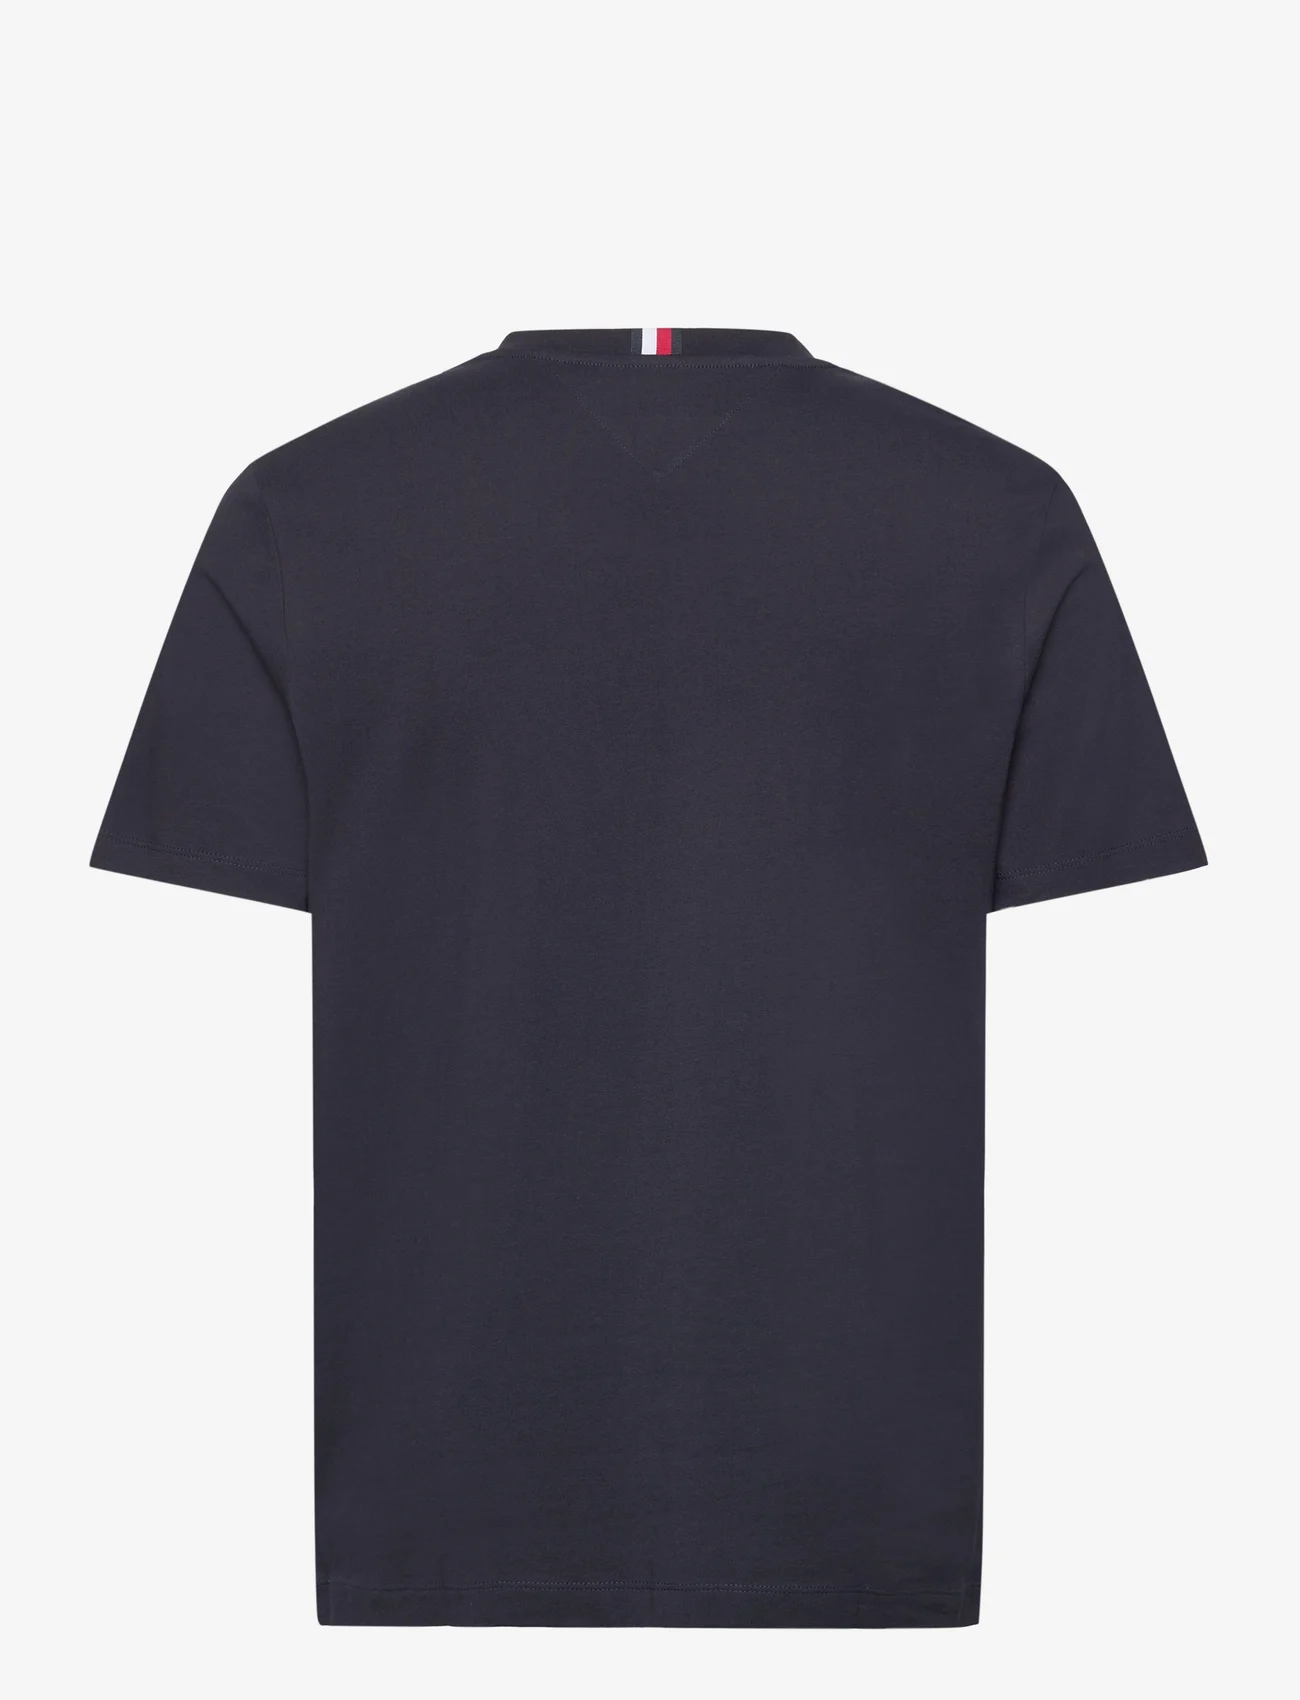 Tommy Hilfiger - MONOTYPE POCKET TEE - kortärmade t-shirts - desert sky - 1